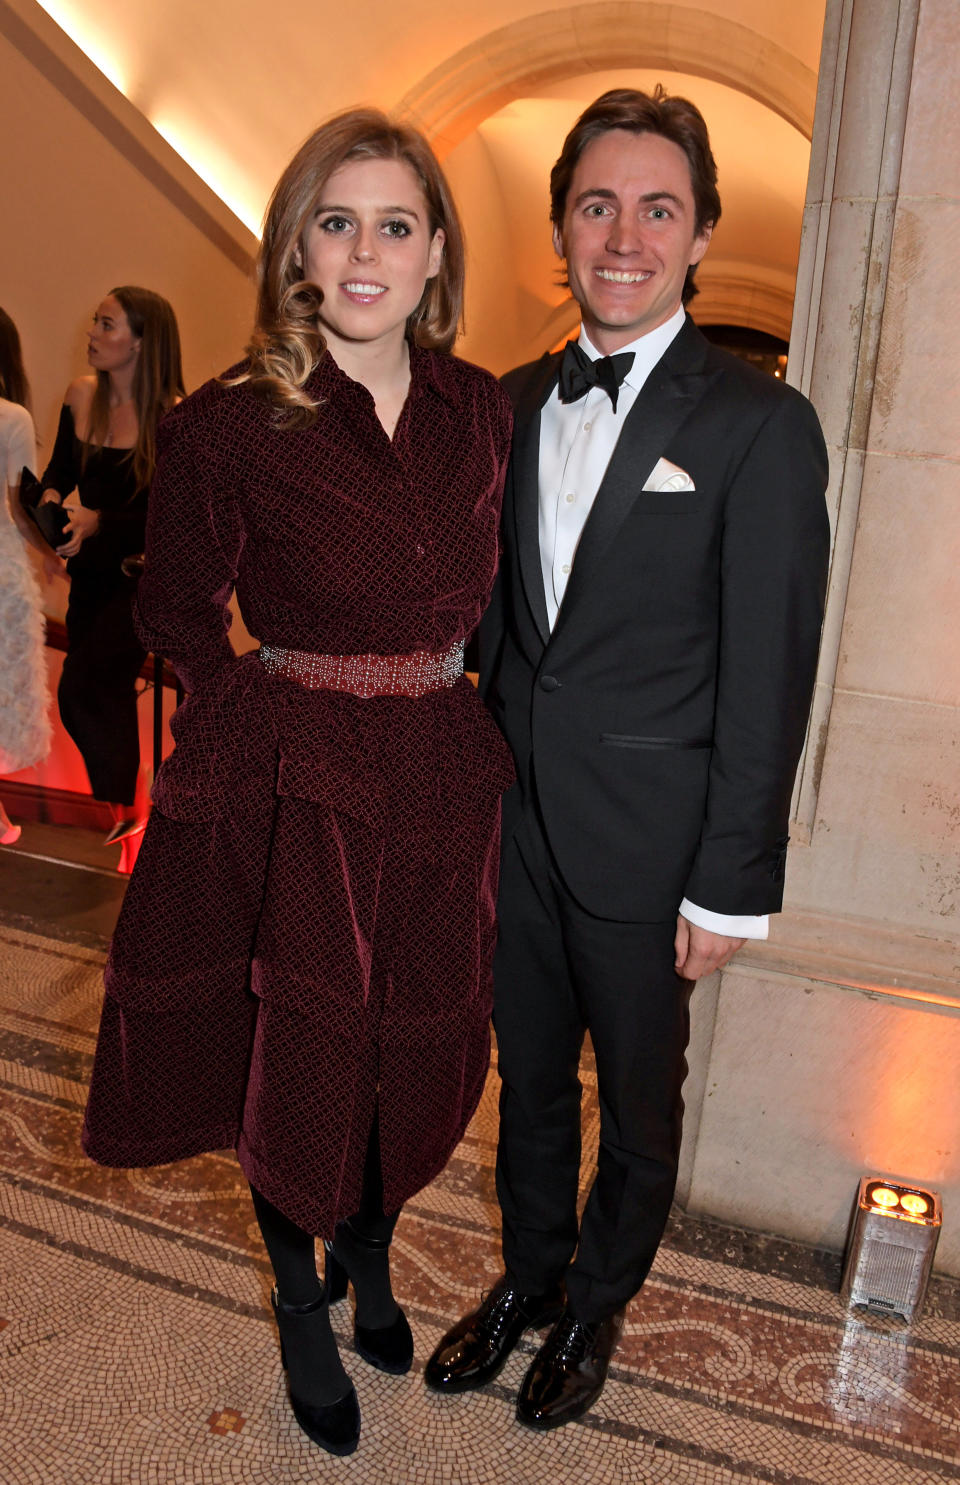 Princess Beatrice and Edoardo Mapelli Mozzi will tie the knot in May. (Photo: David M. Benett via Getty Images)